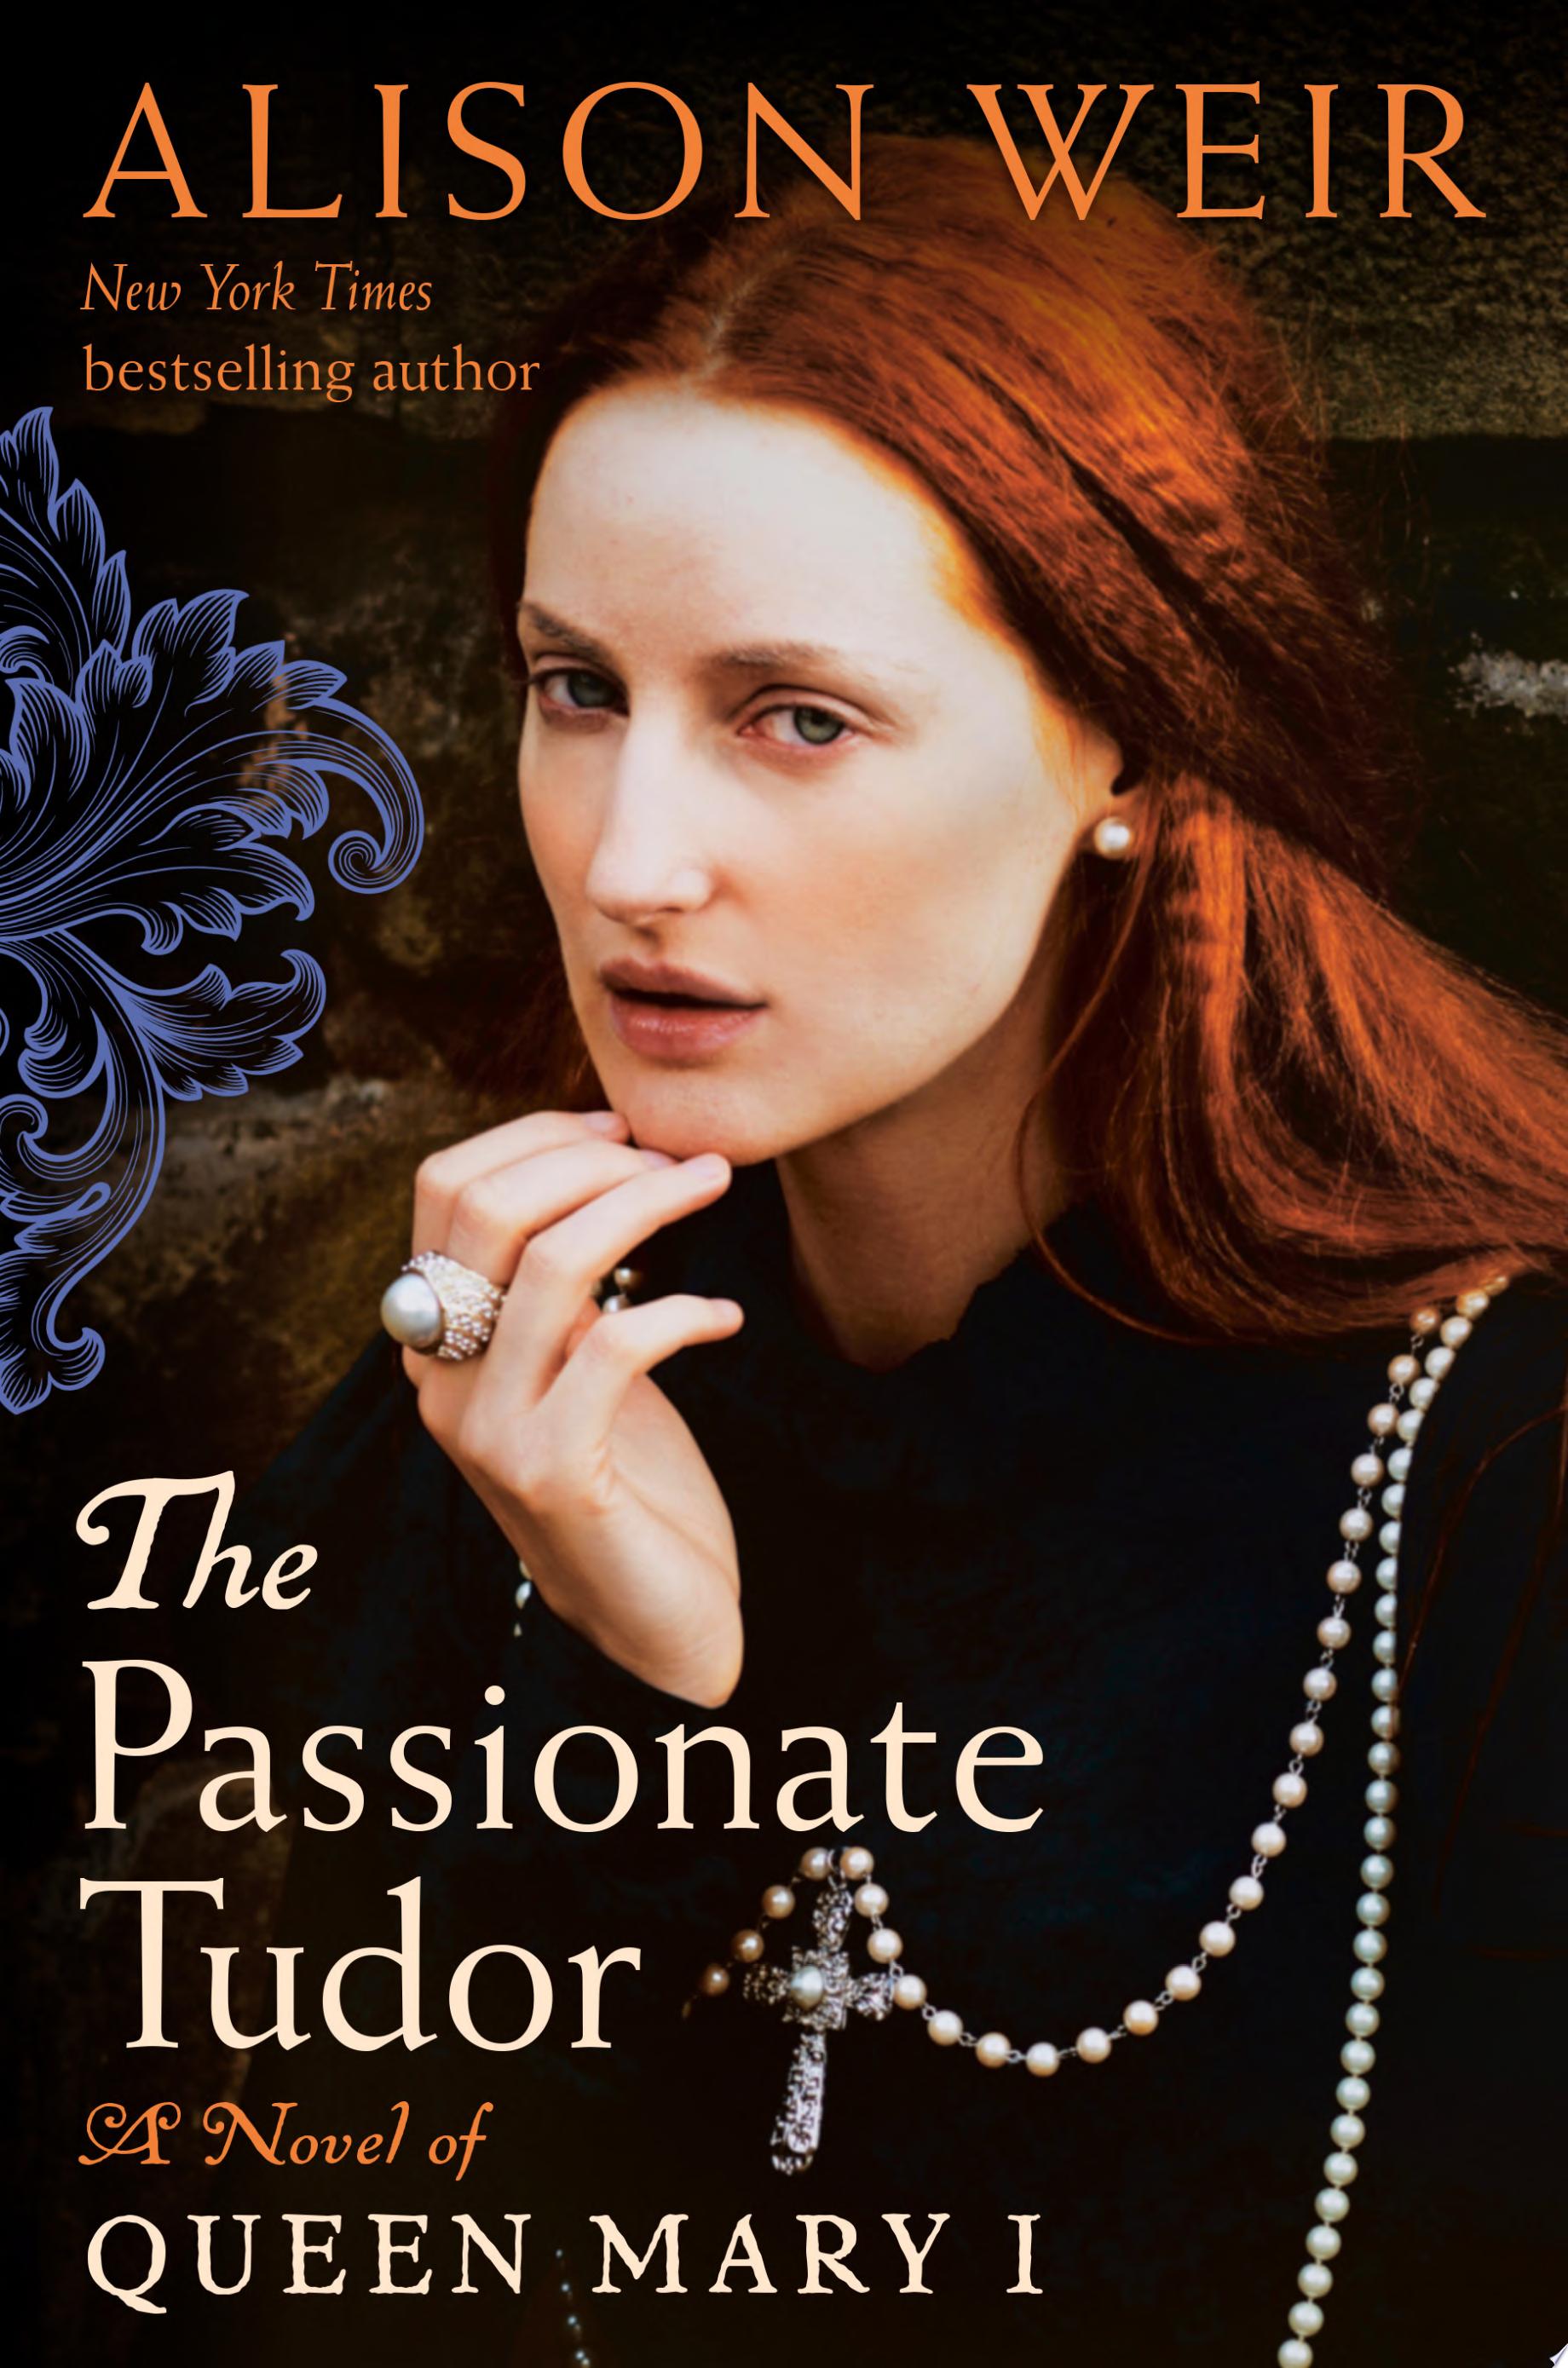 Image for "The Passionate Tudor"